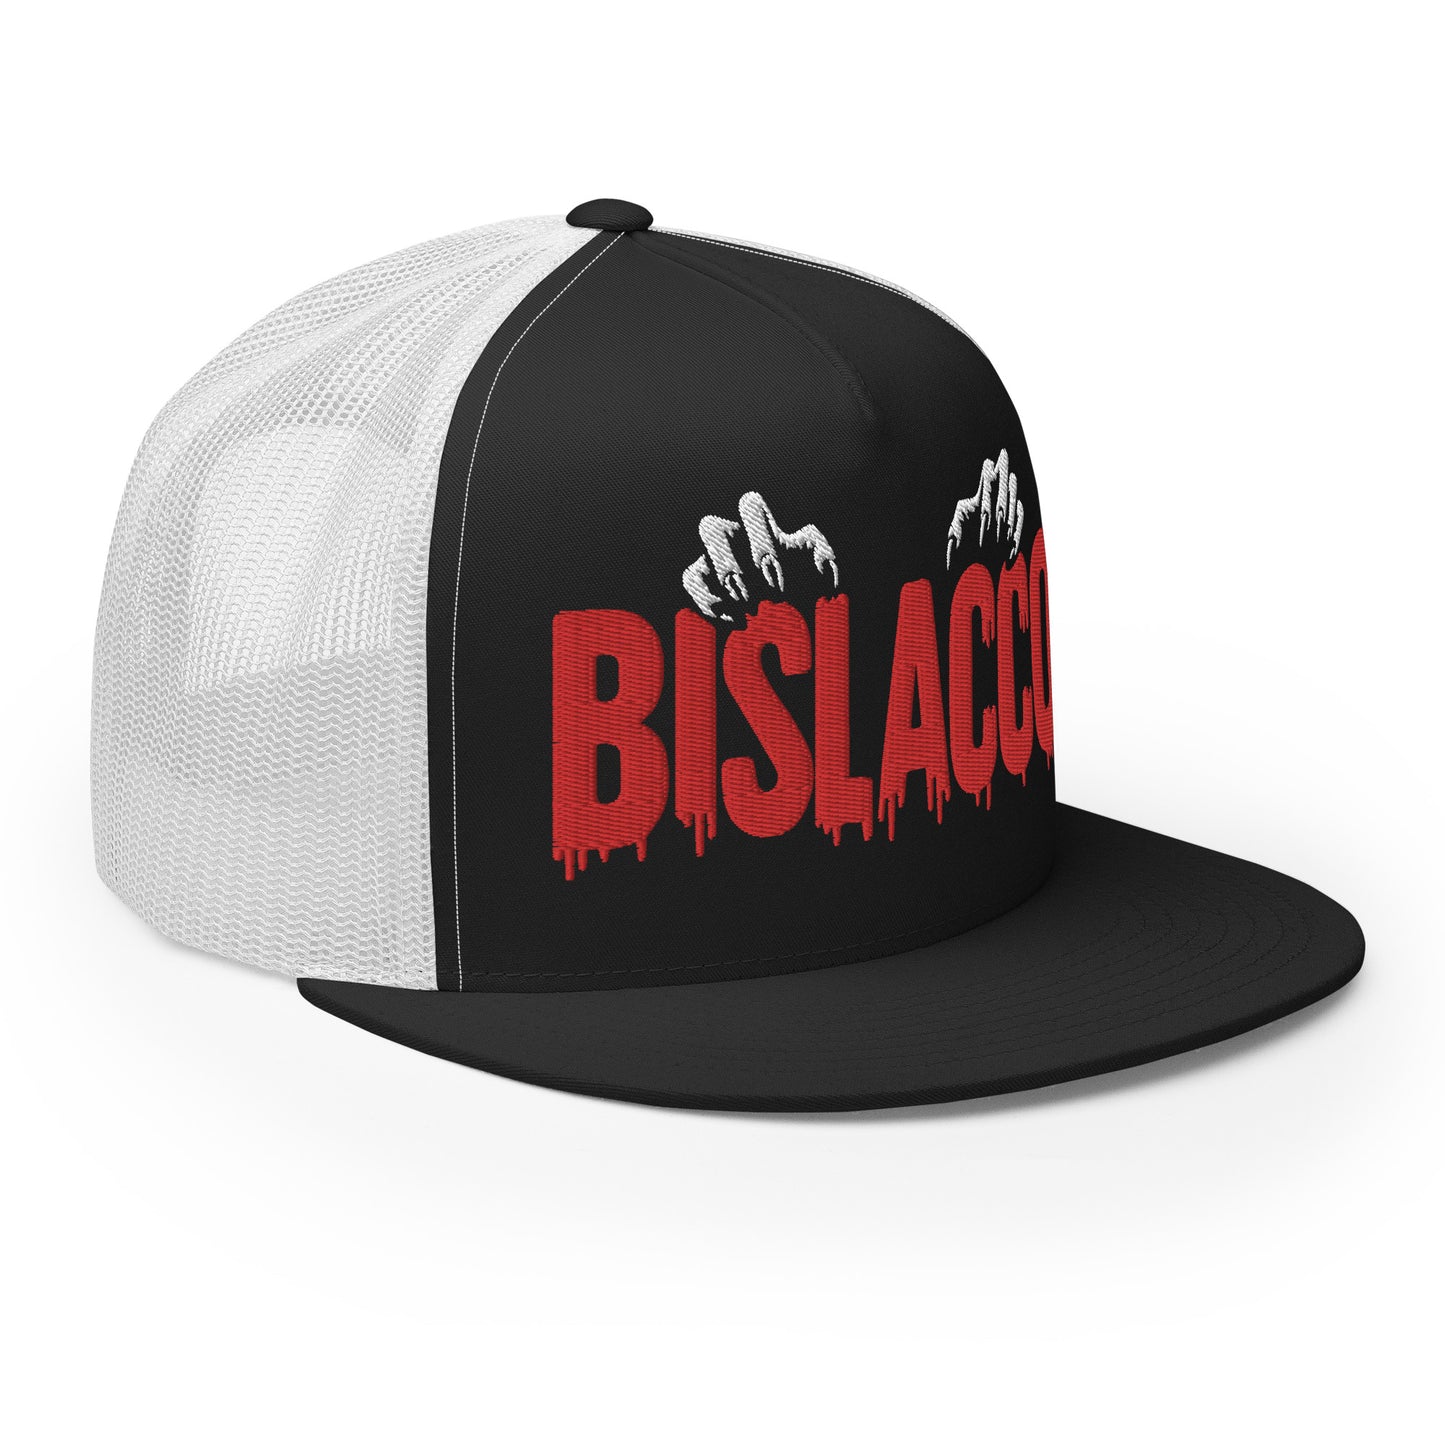 Bislacco trucker hat